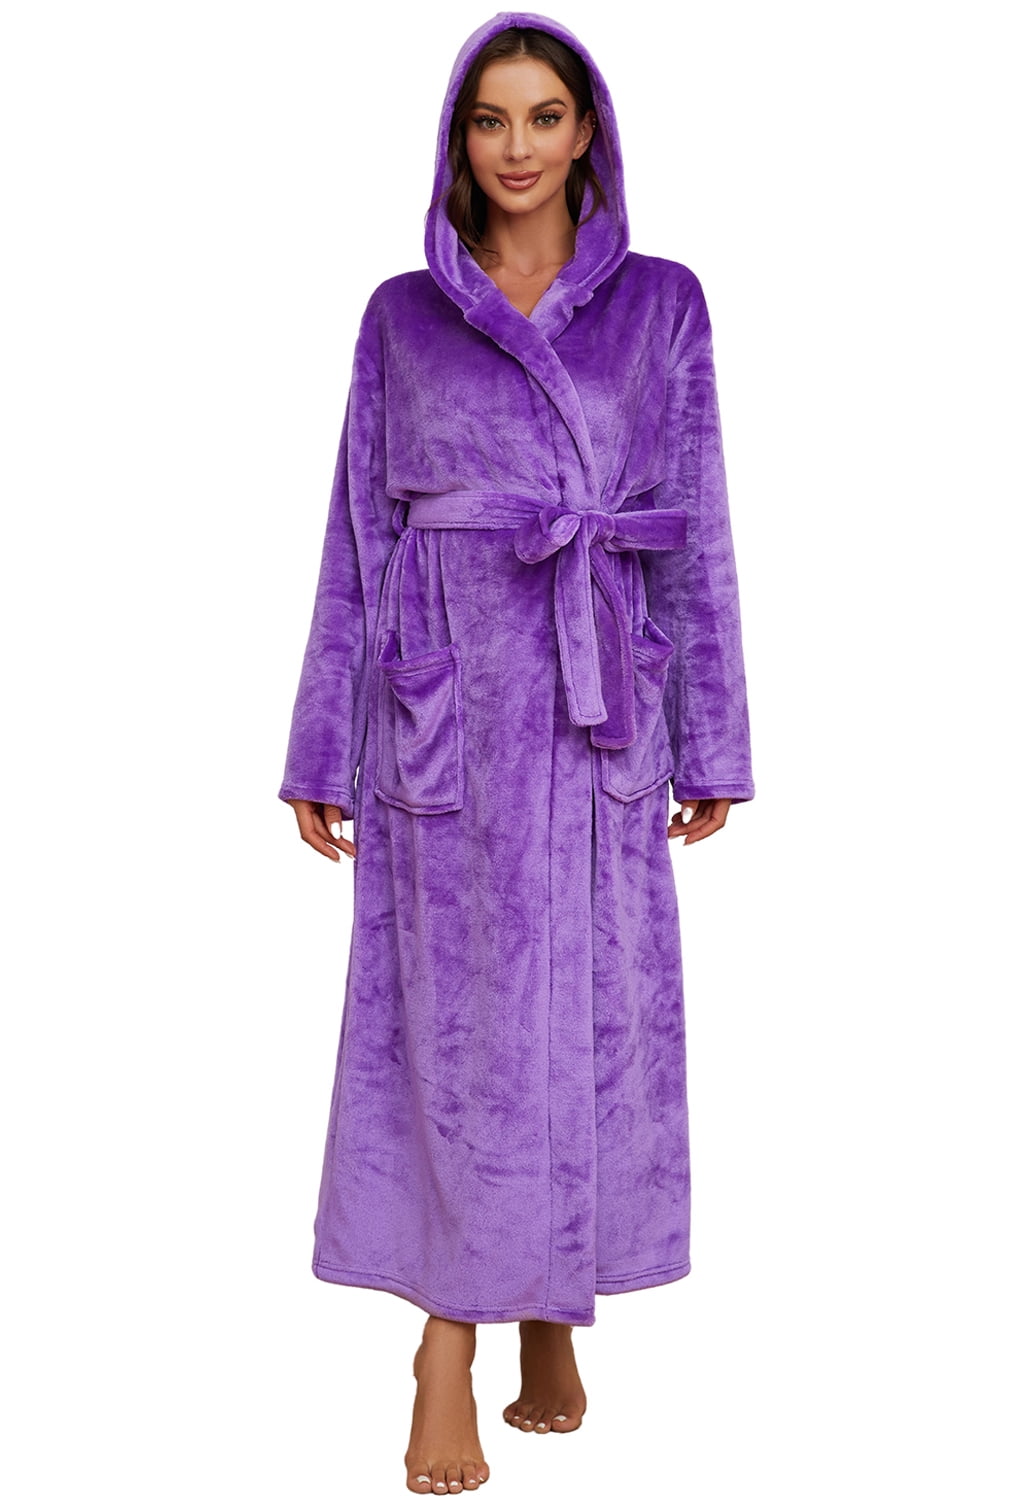 HEARTNICE Womens Hooded Fleece Robe, Thick Warm Plush Bathrobe for